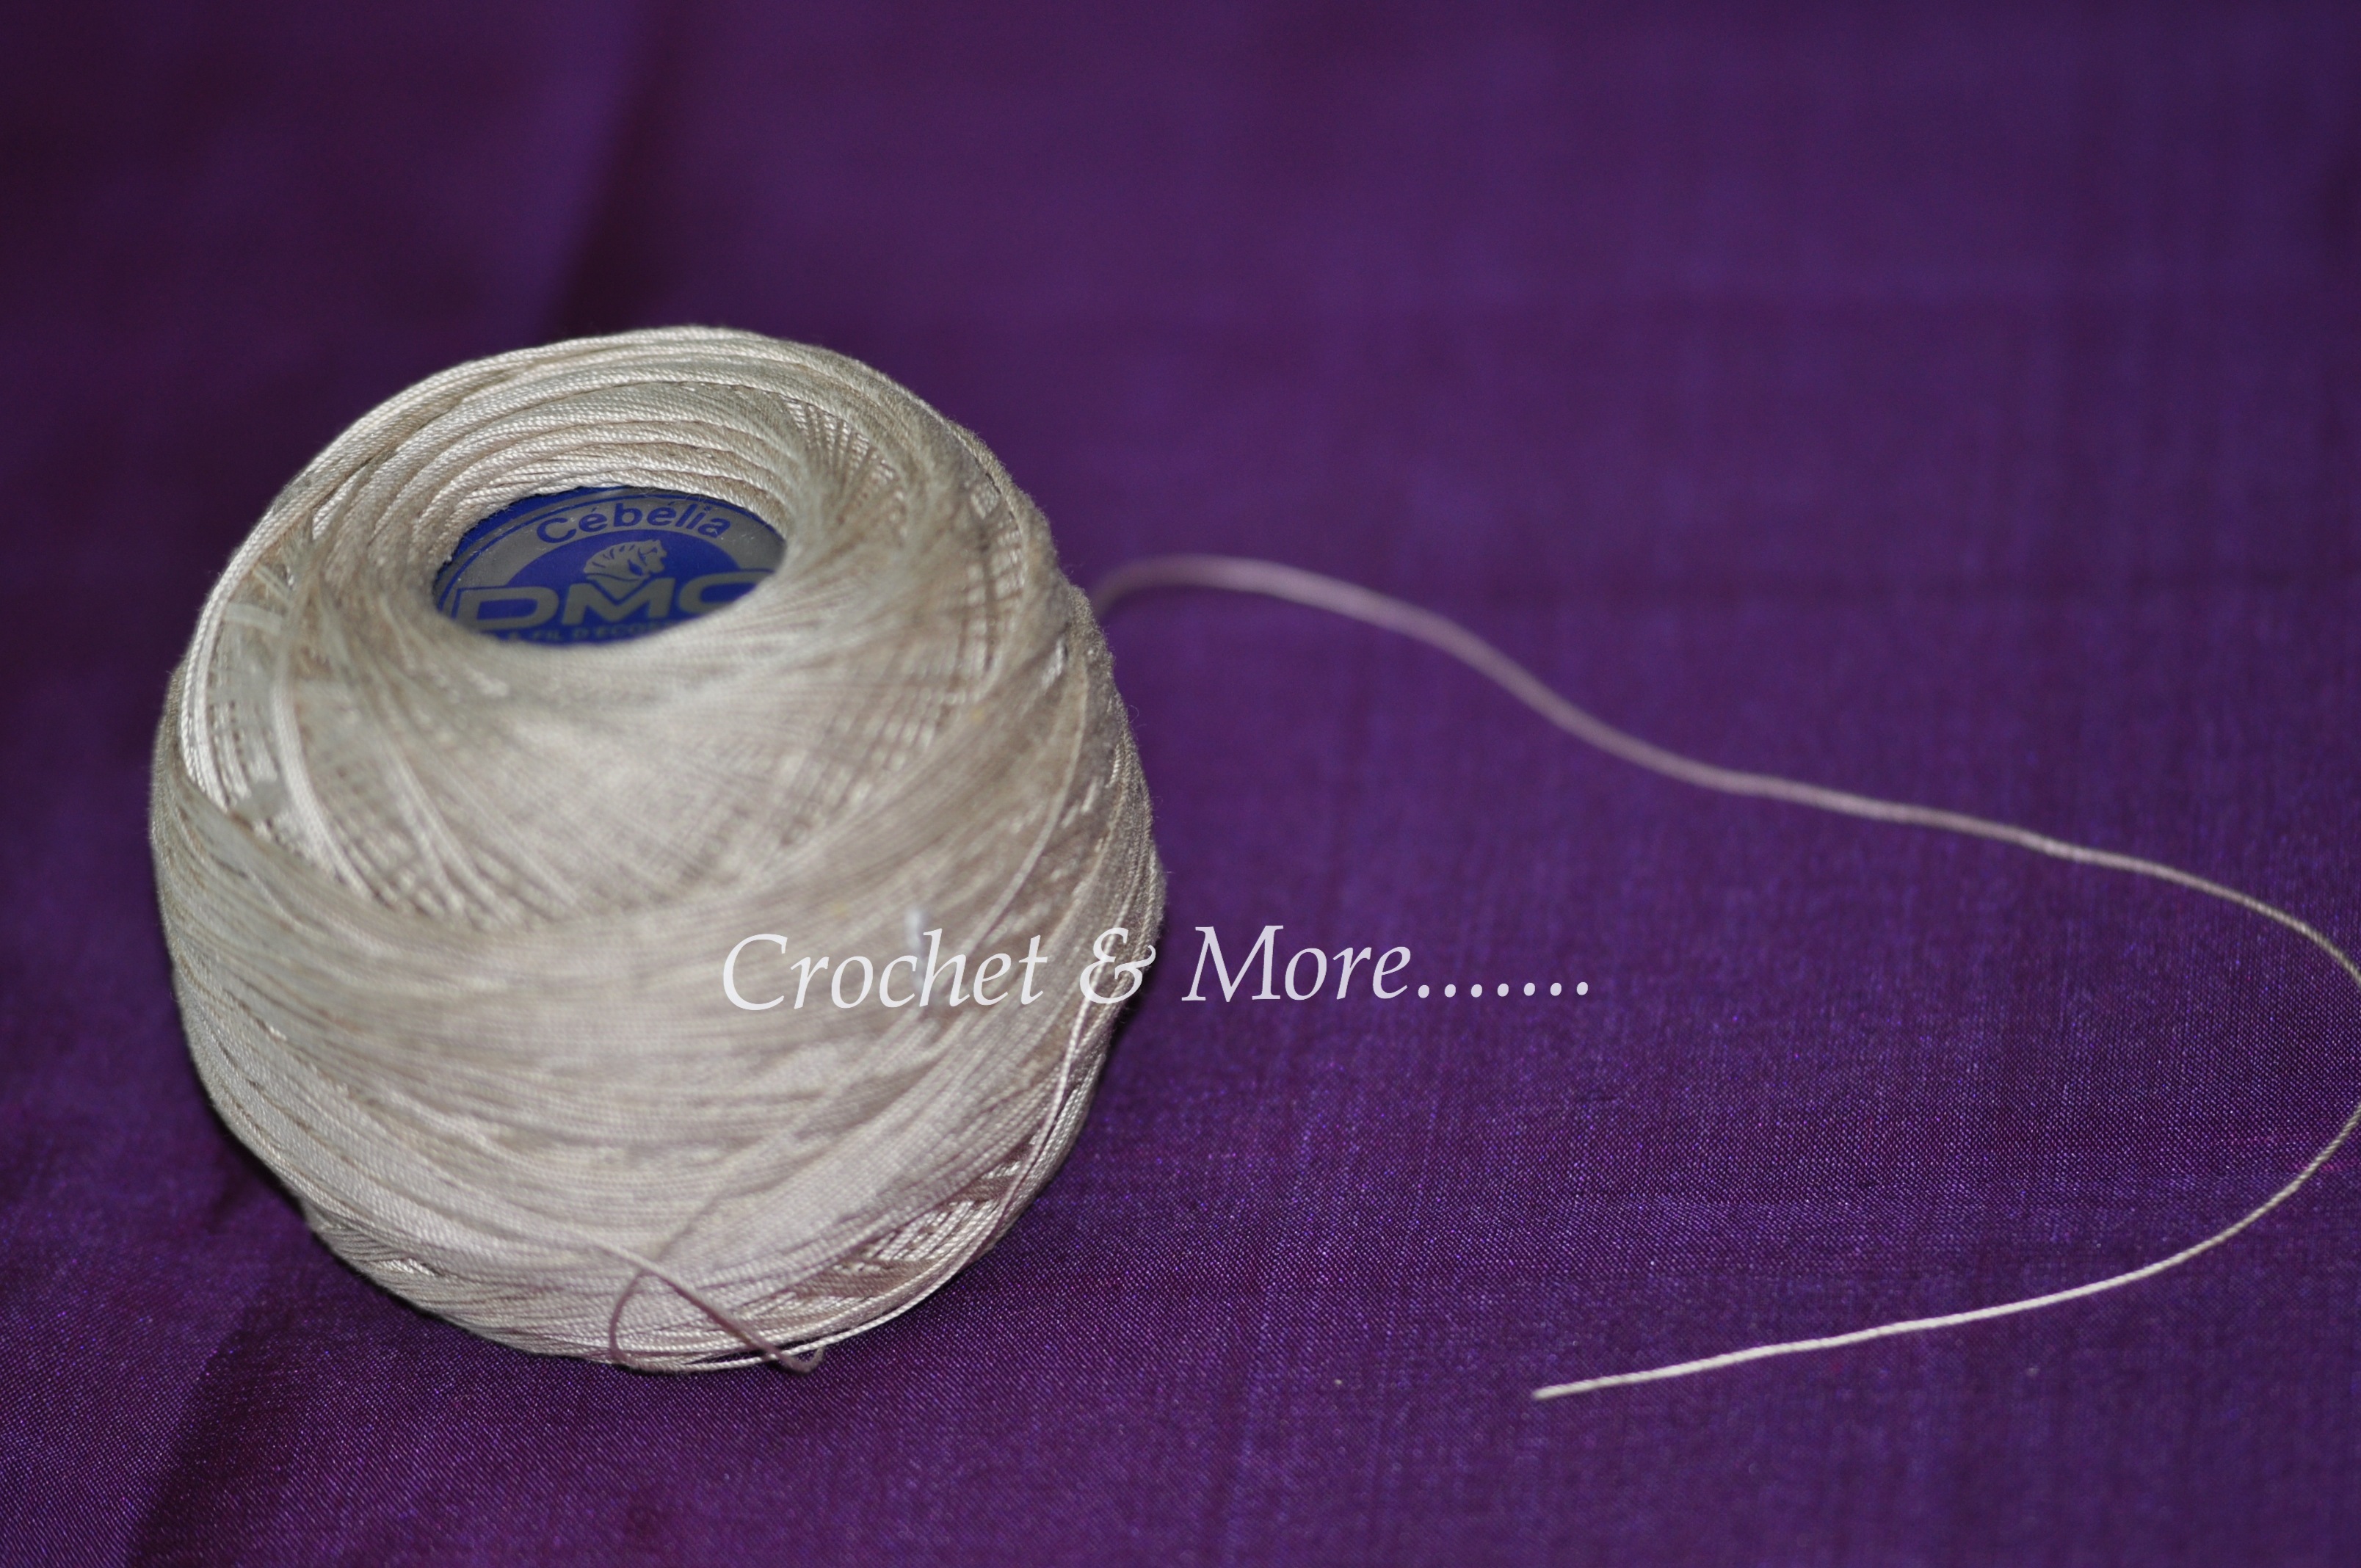 25 Crochet Cotton Tatting Thread Yarn for Knitting and Craft Making